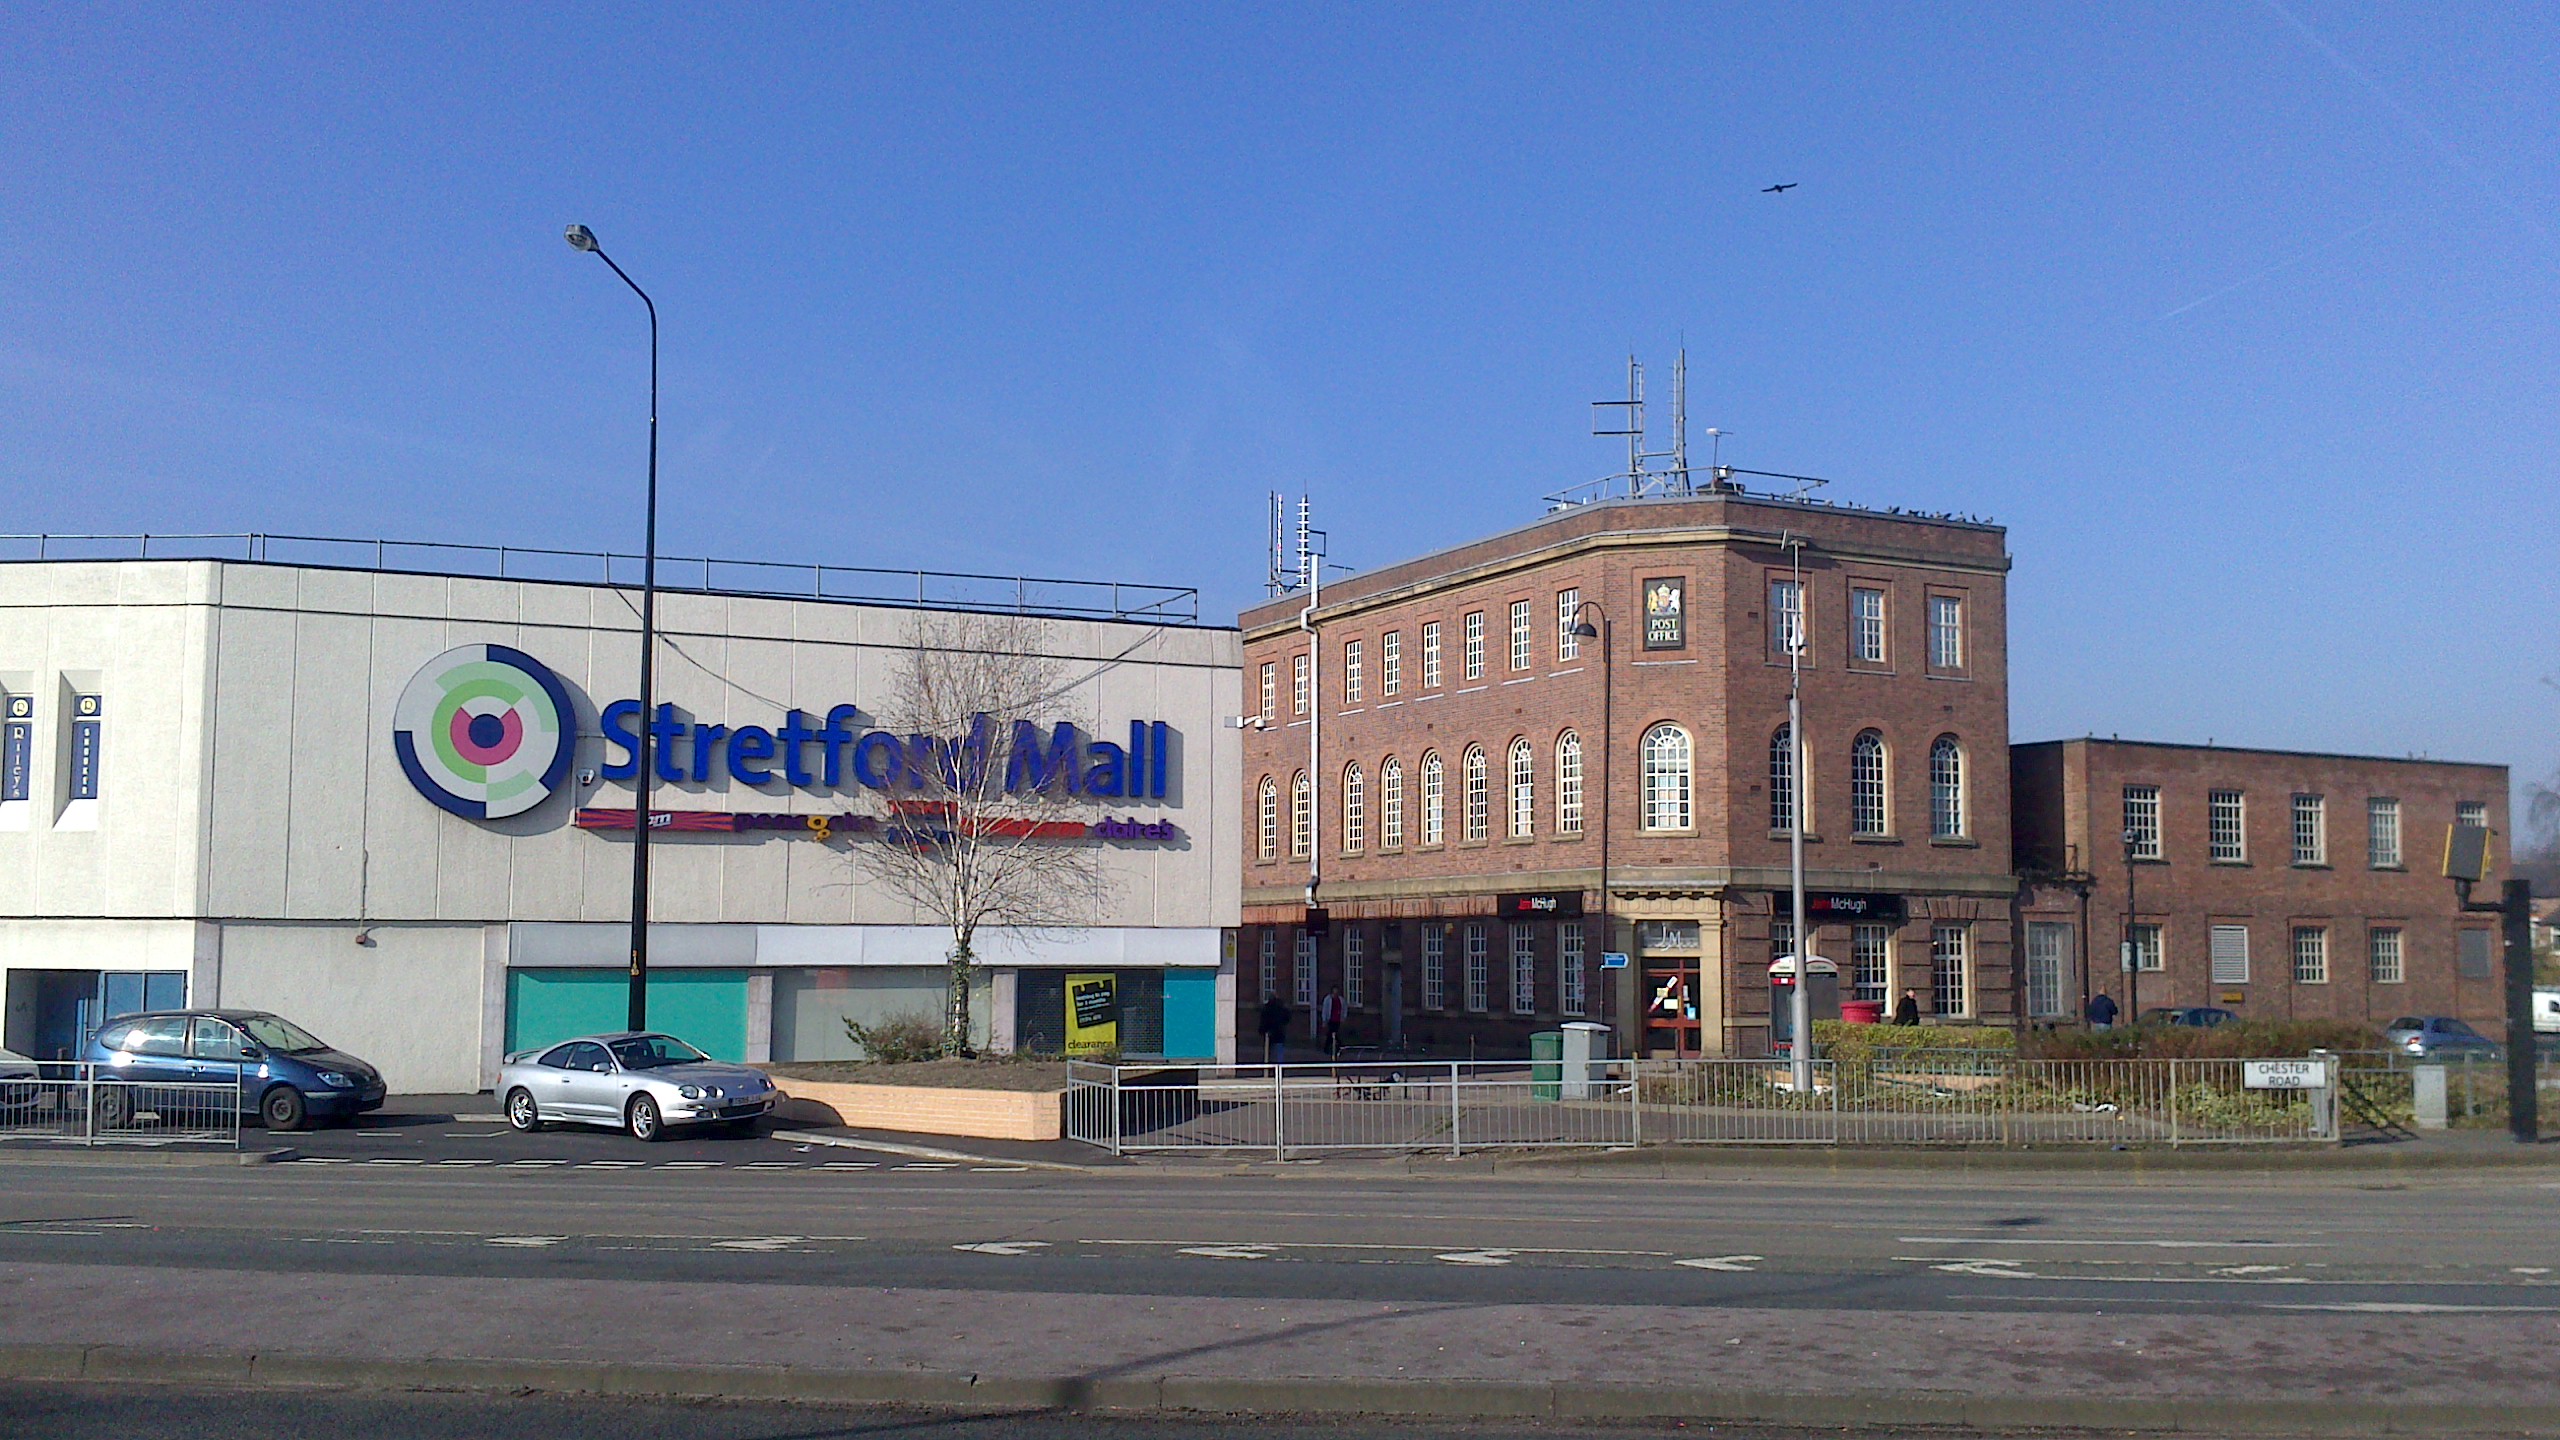 Stretford Mall 6